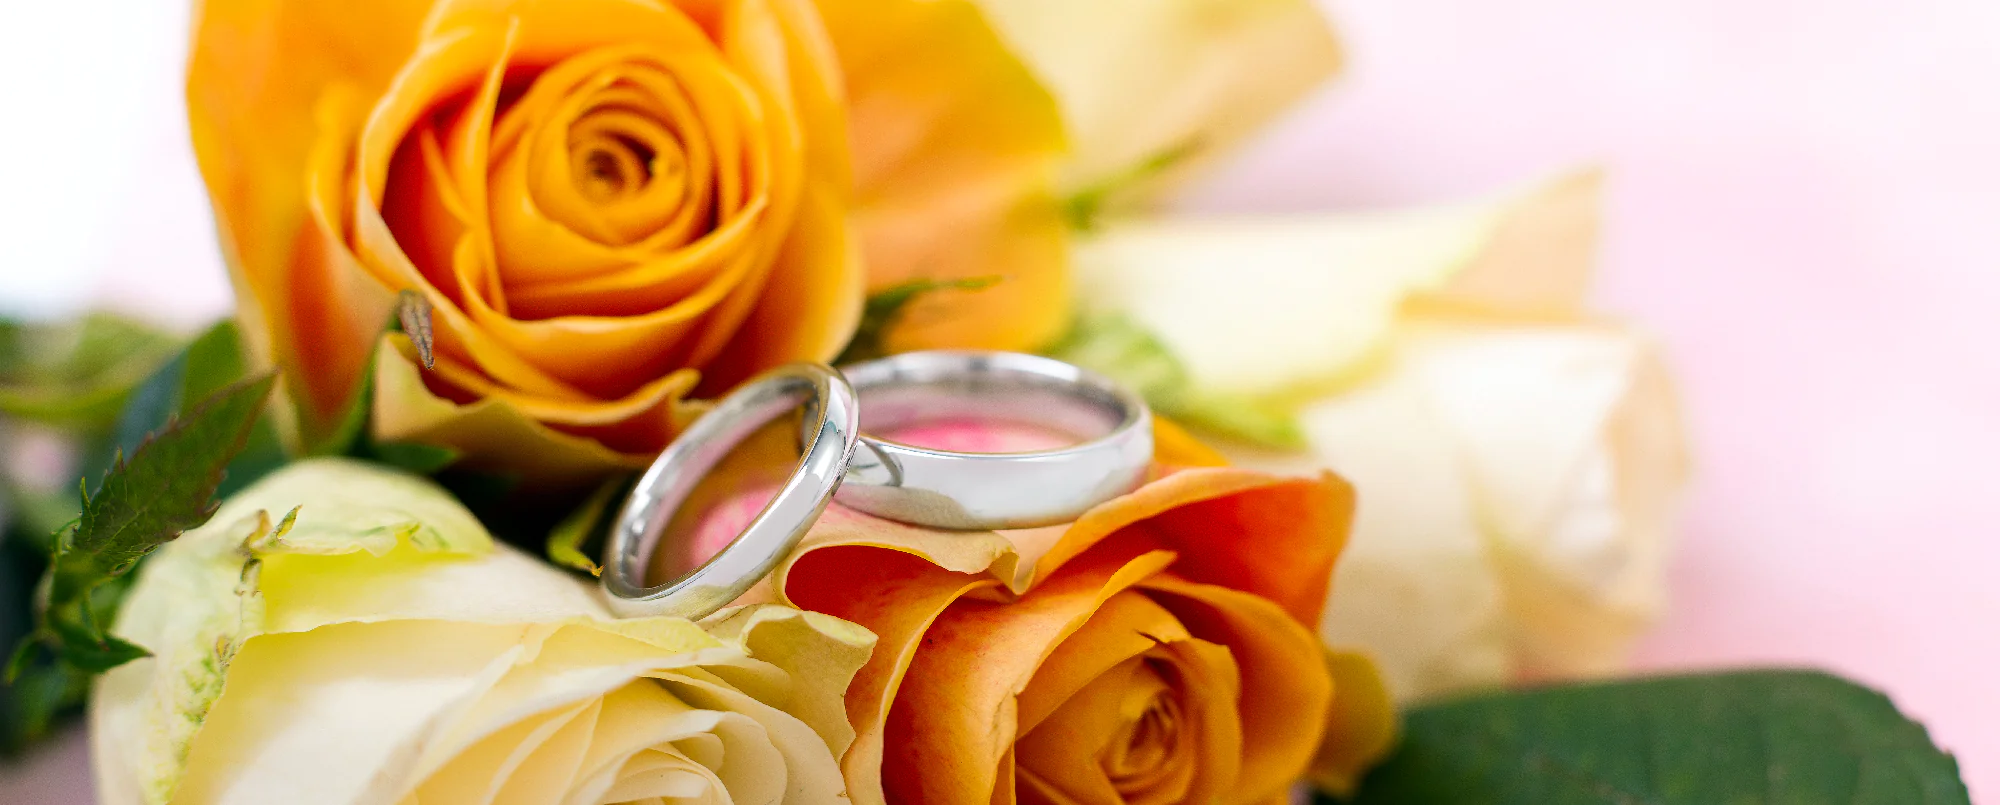 10 Stunning “Engagement Ring Selfie” Ideas with Bonus Tips! |